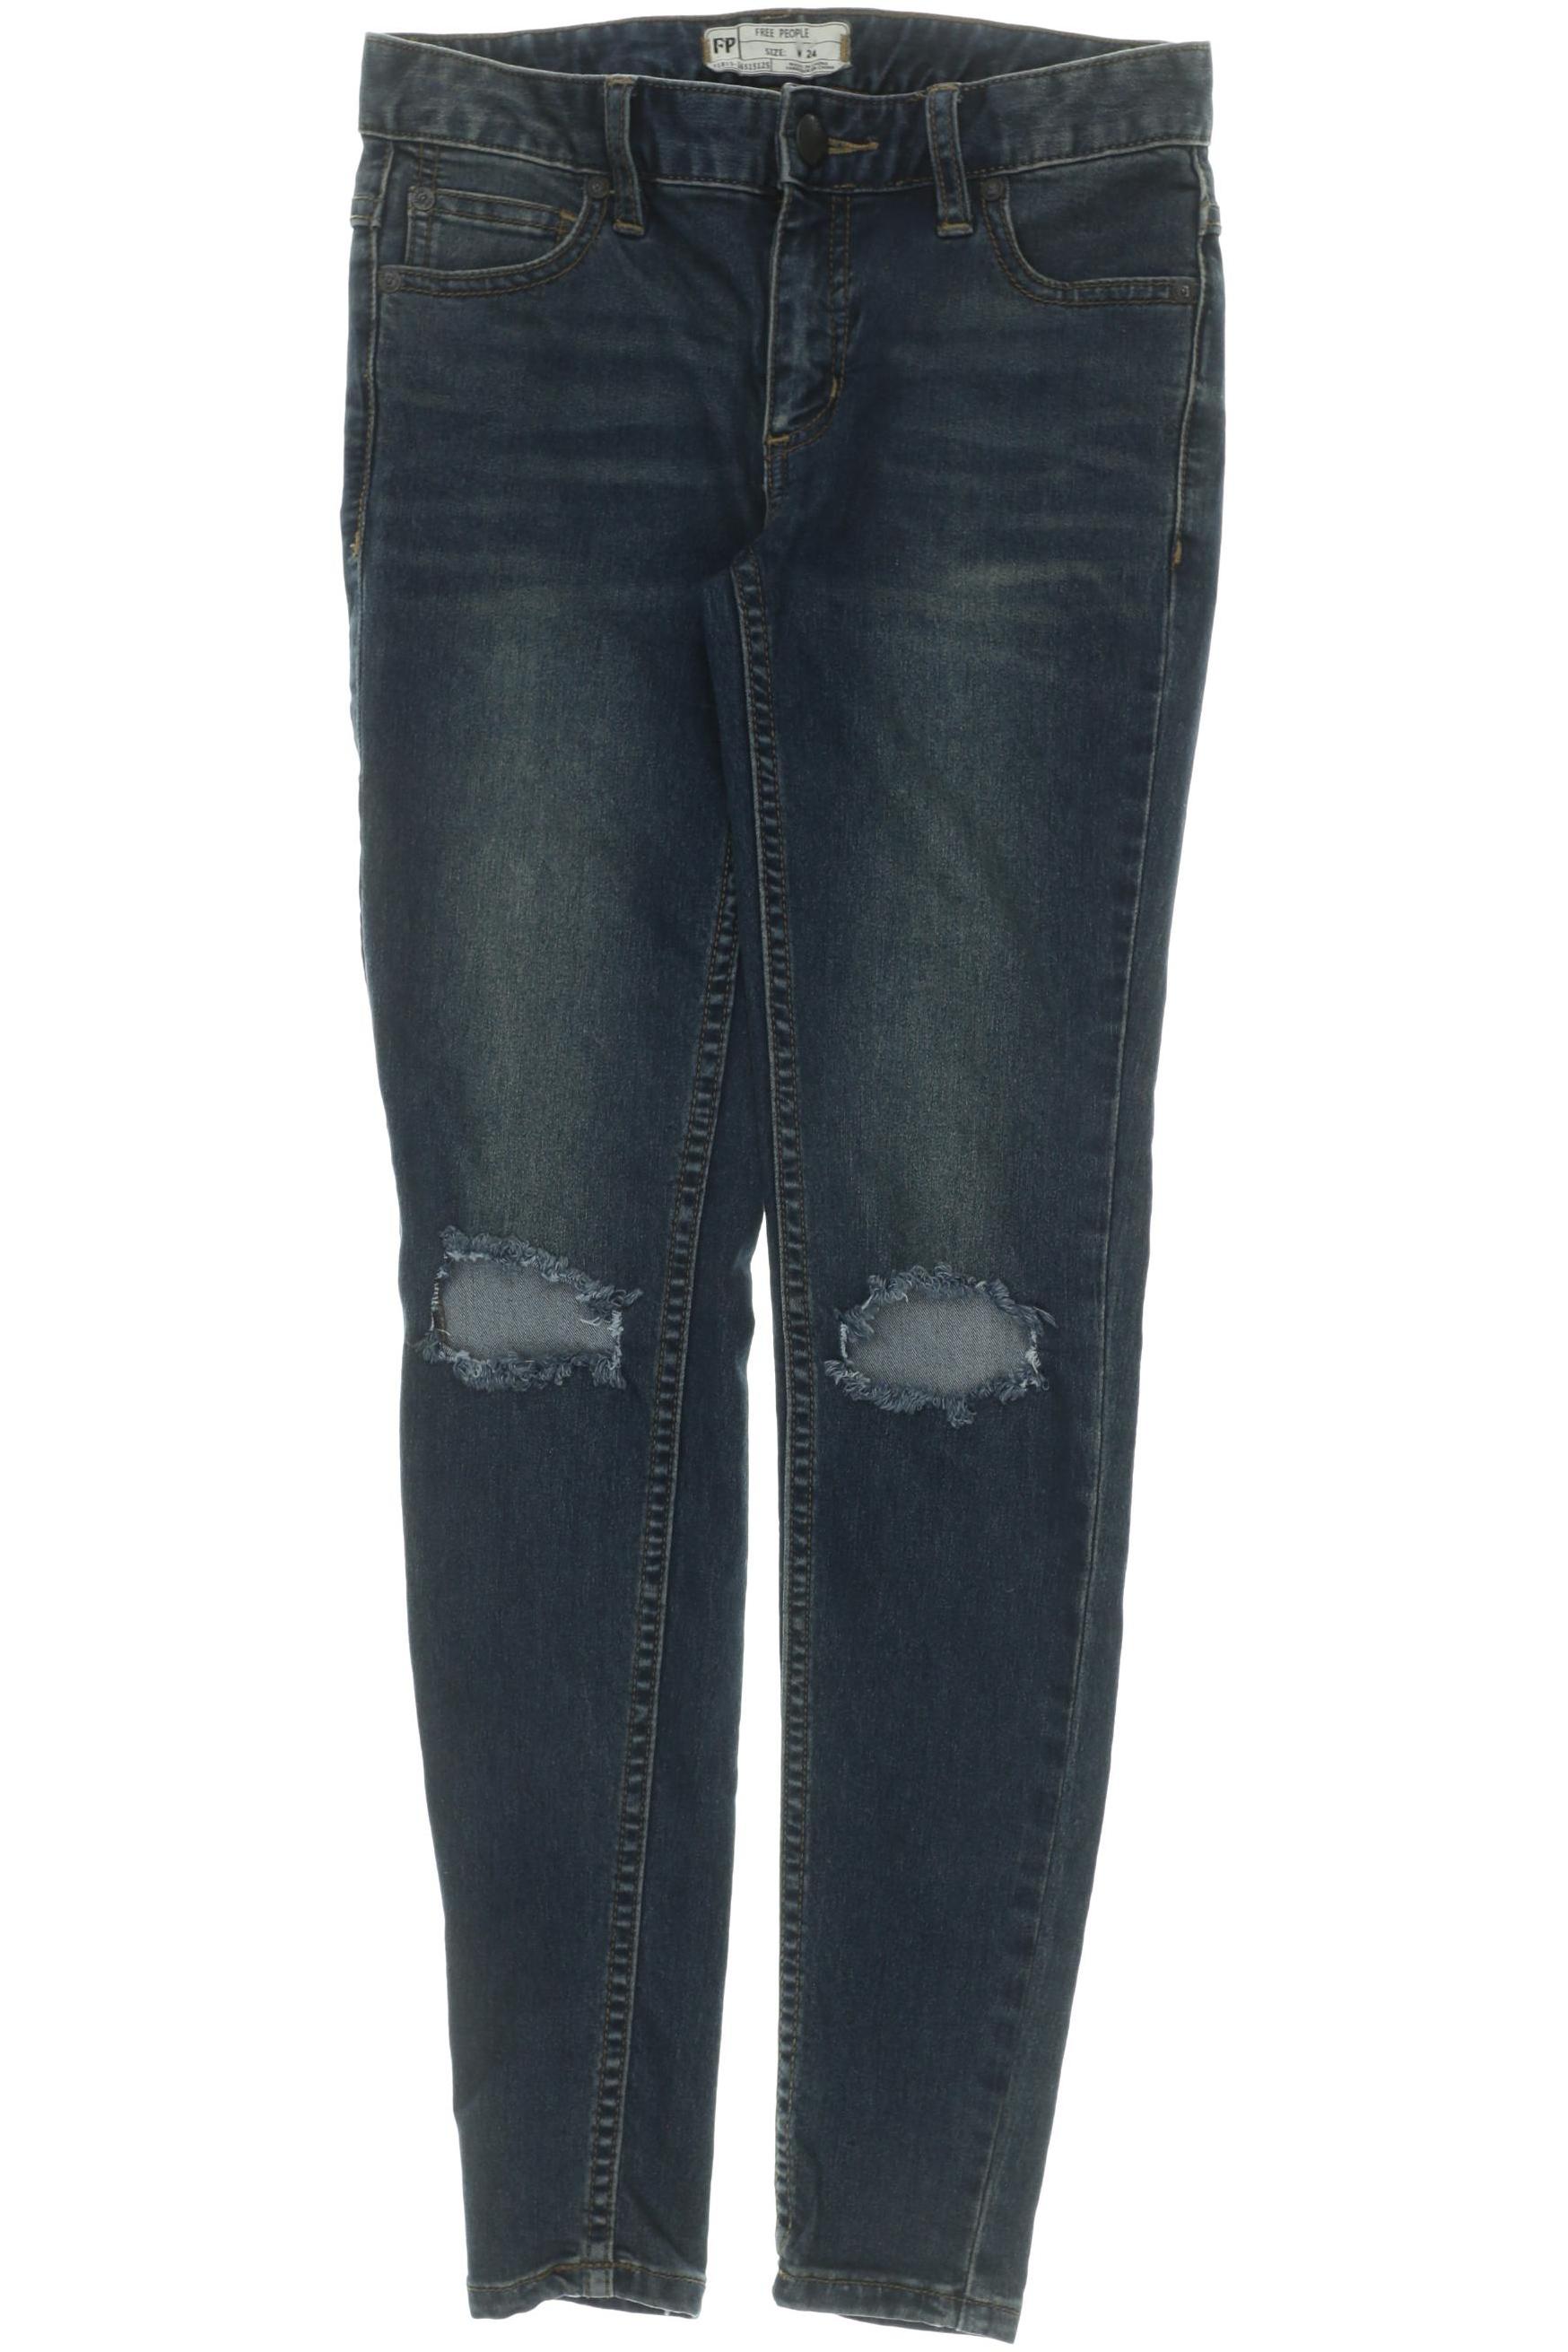 Urban Outfitters Damen Jeans, blau von Urban Outfitters